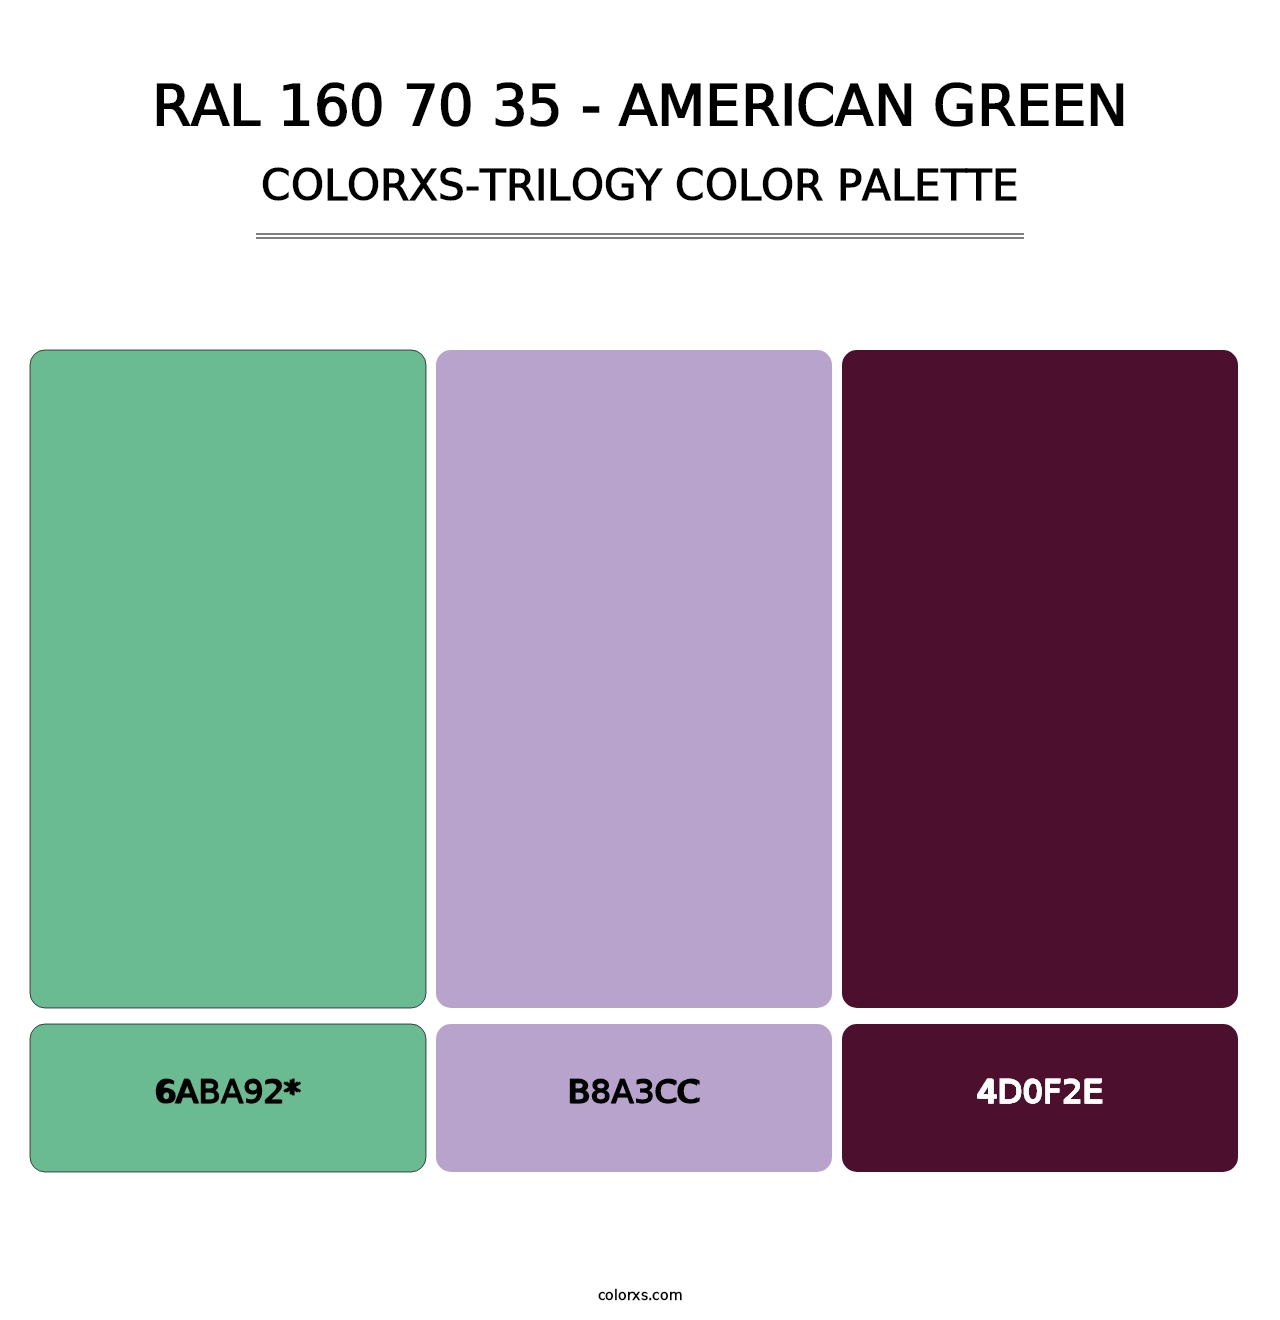 RAL 160 70 35 - American Green - Colorxs Trilogy Palette